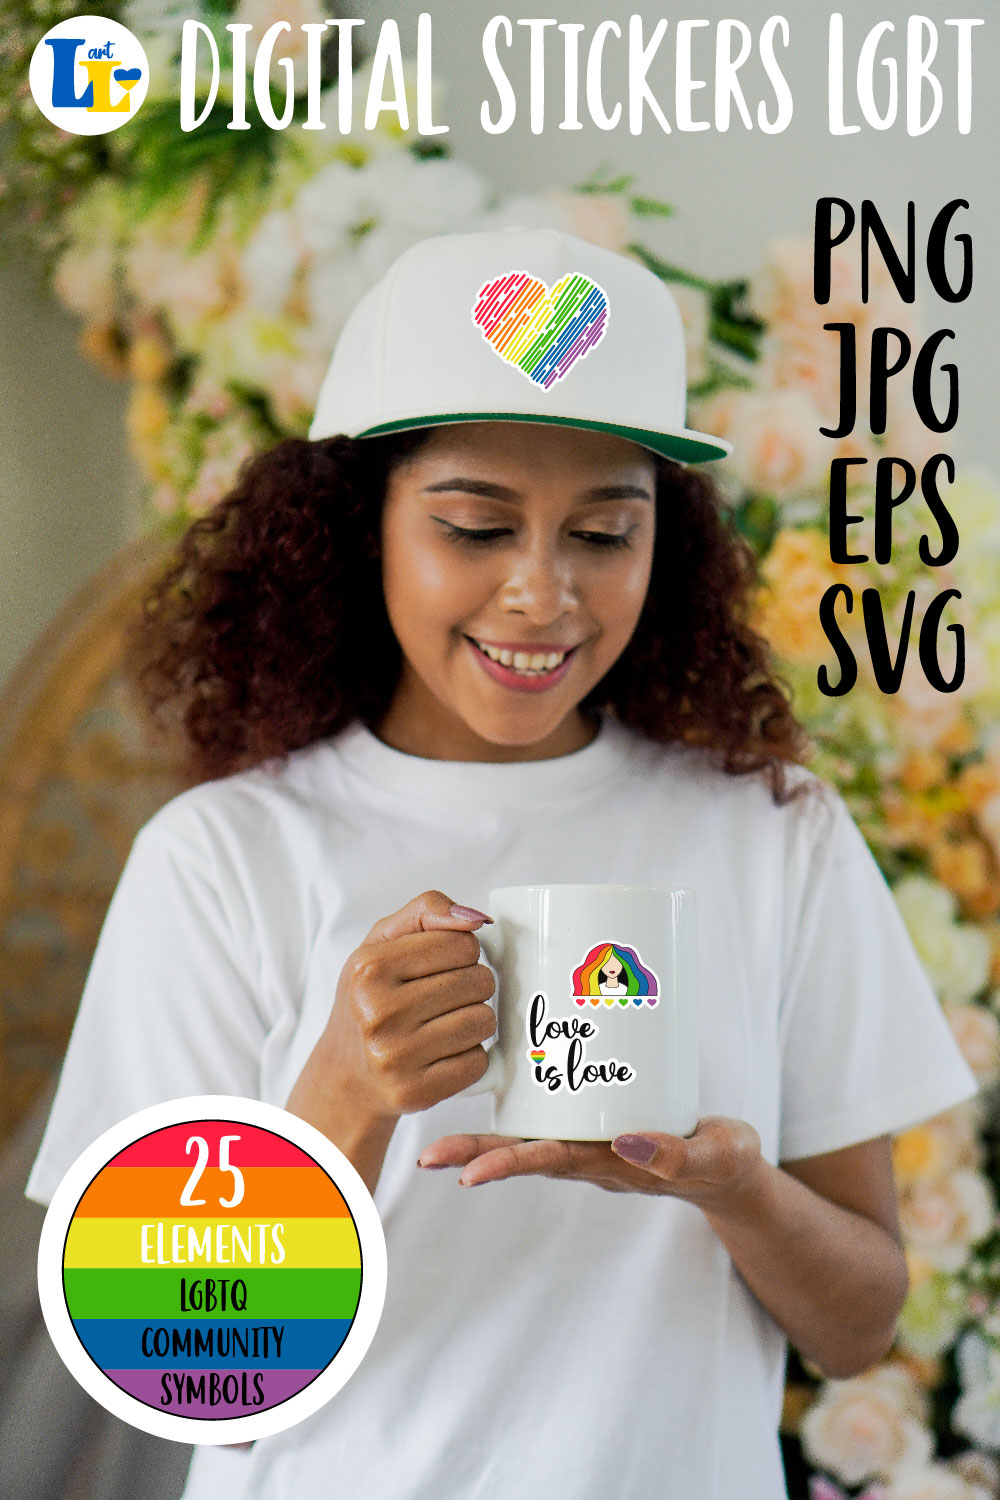 Digital Stickers LGBTQ Community Symbols Pinterest Image.